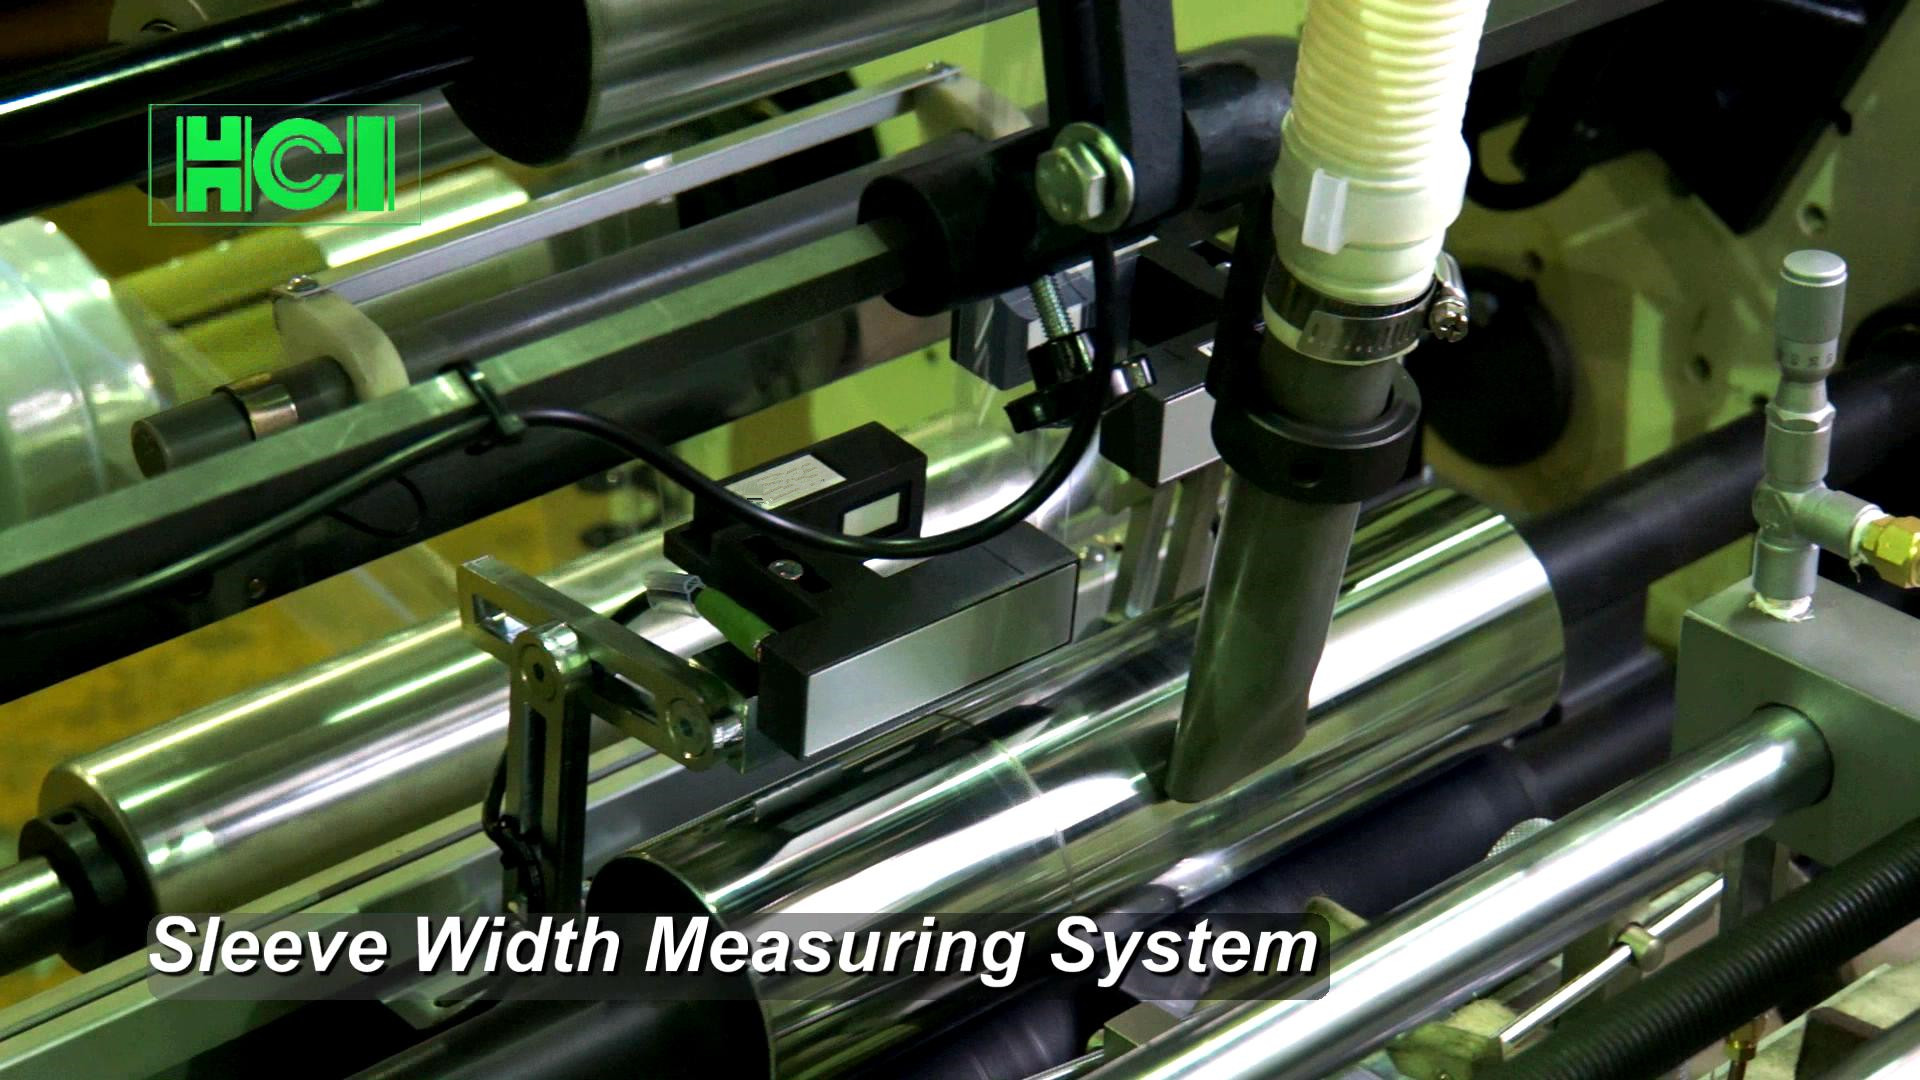 In-Line Sleeve Width Measuring System